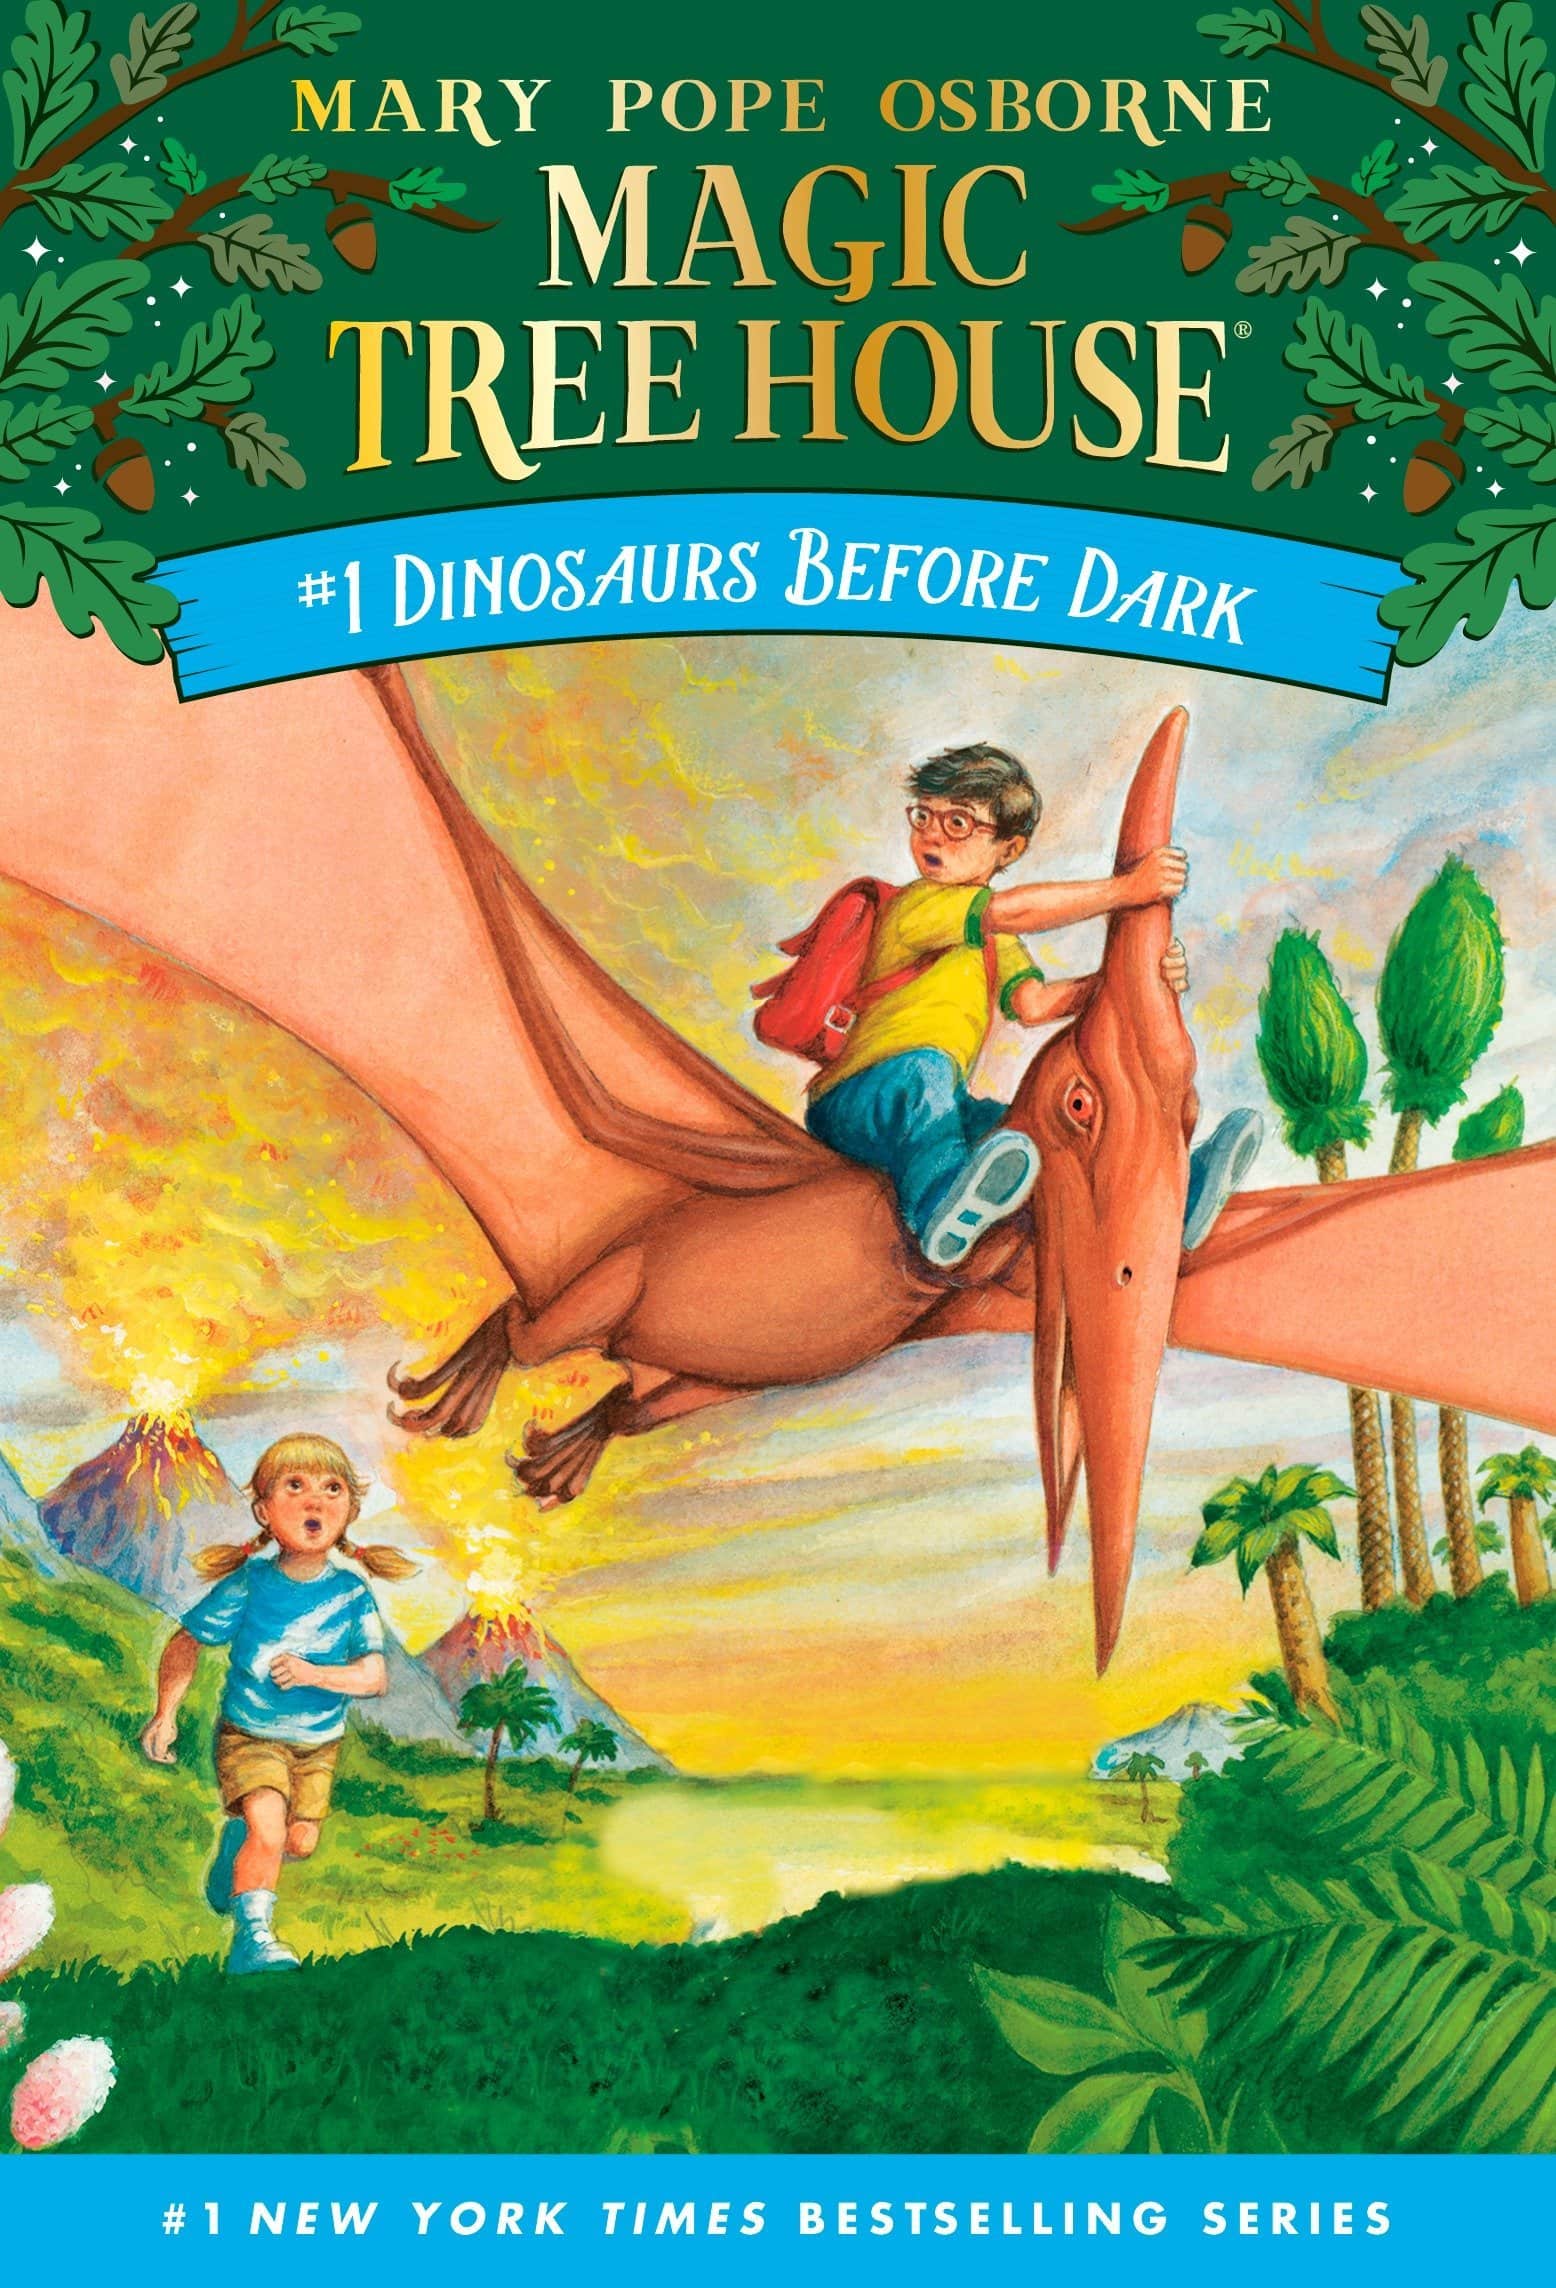 magical tree house fredericksburg tx